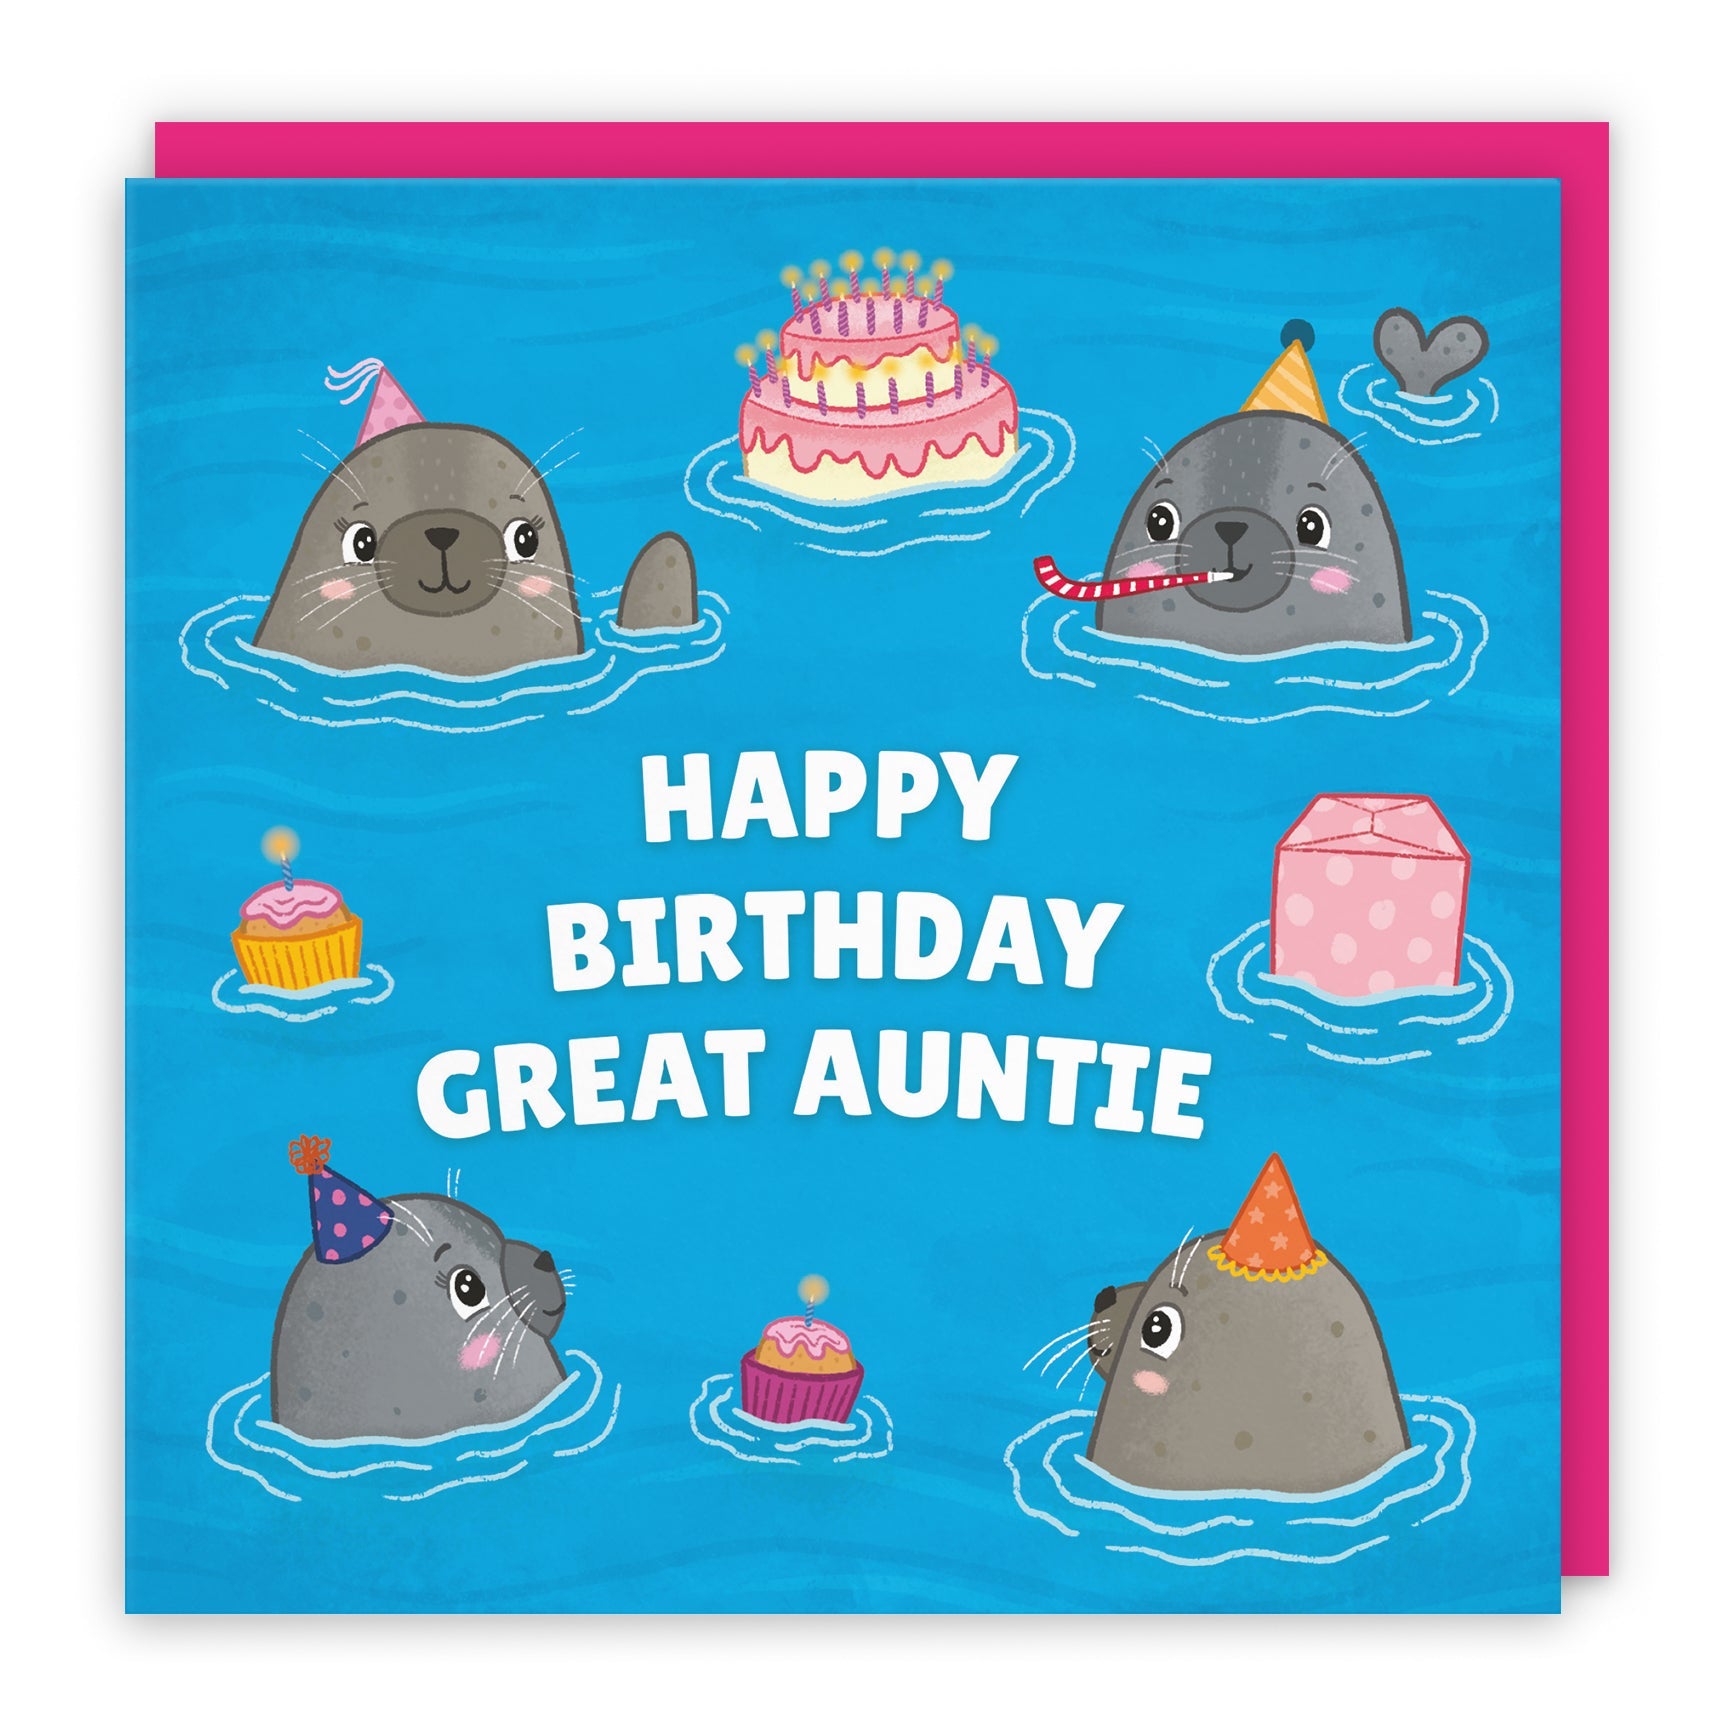 Great Auntie Birthday Cards - Seals - Ocean - Wildlife - Animals